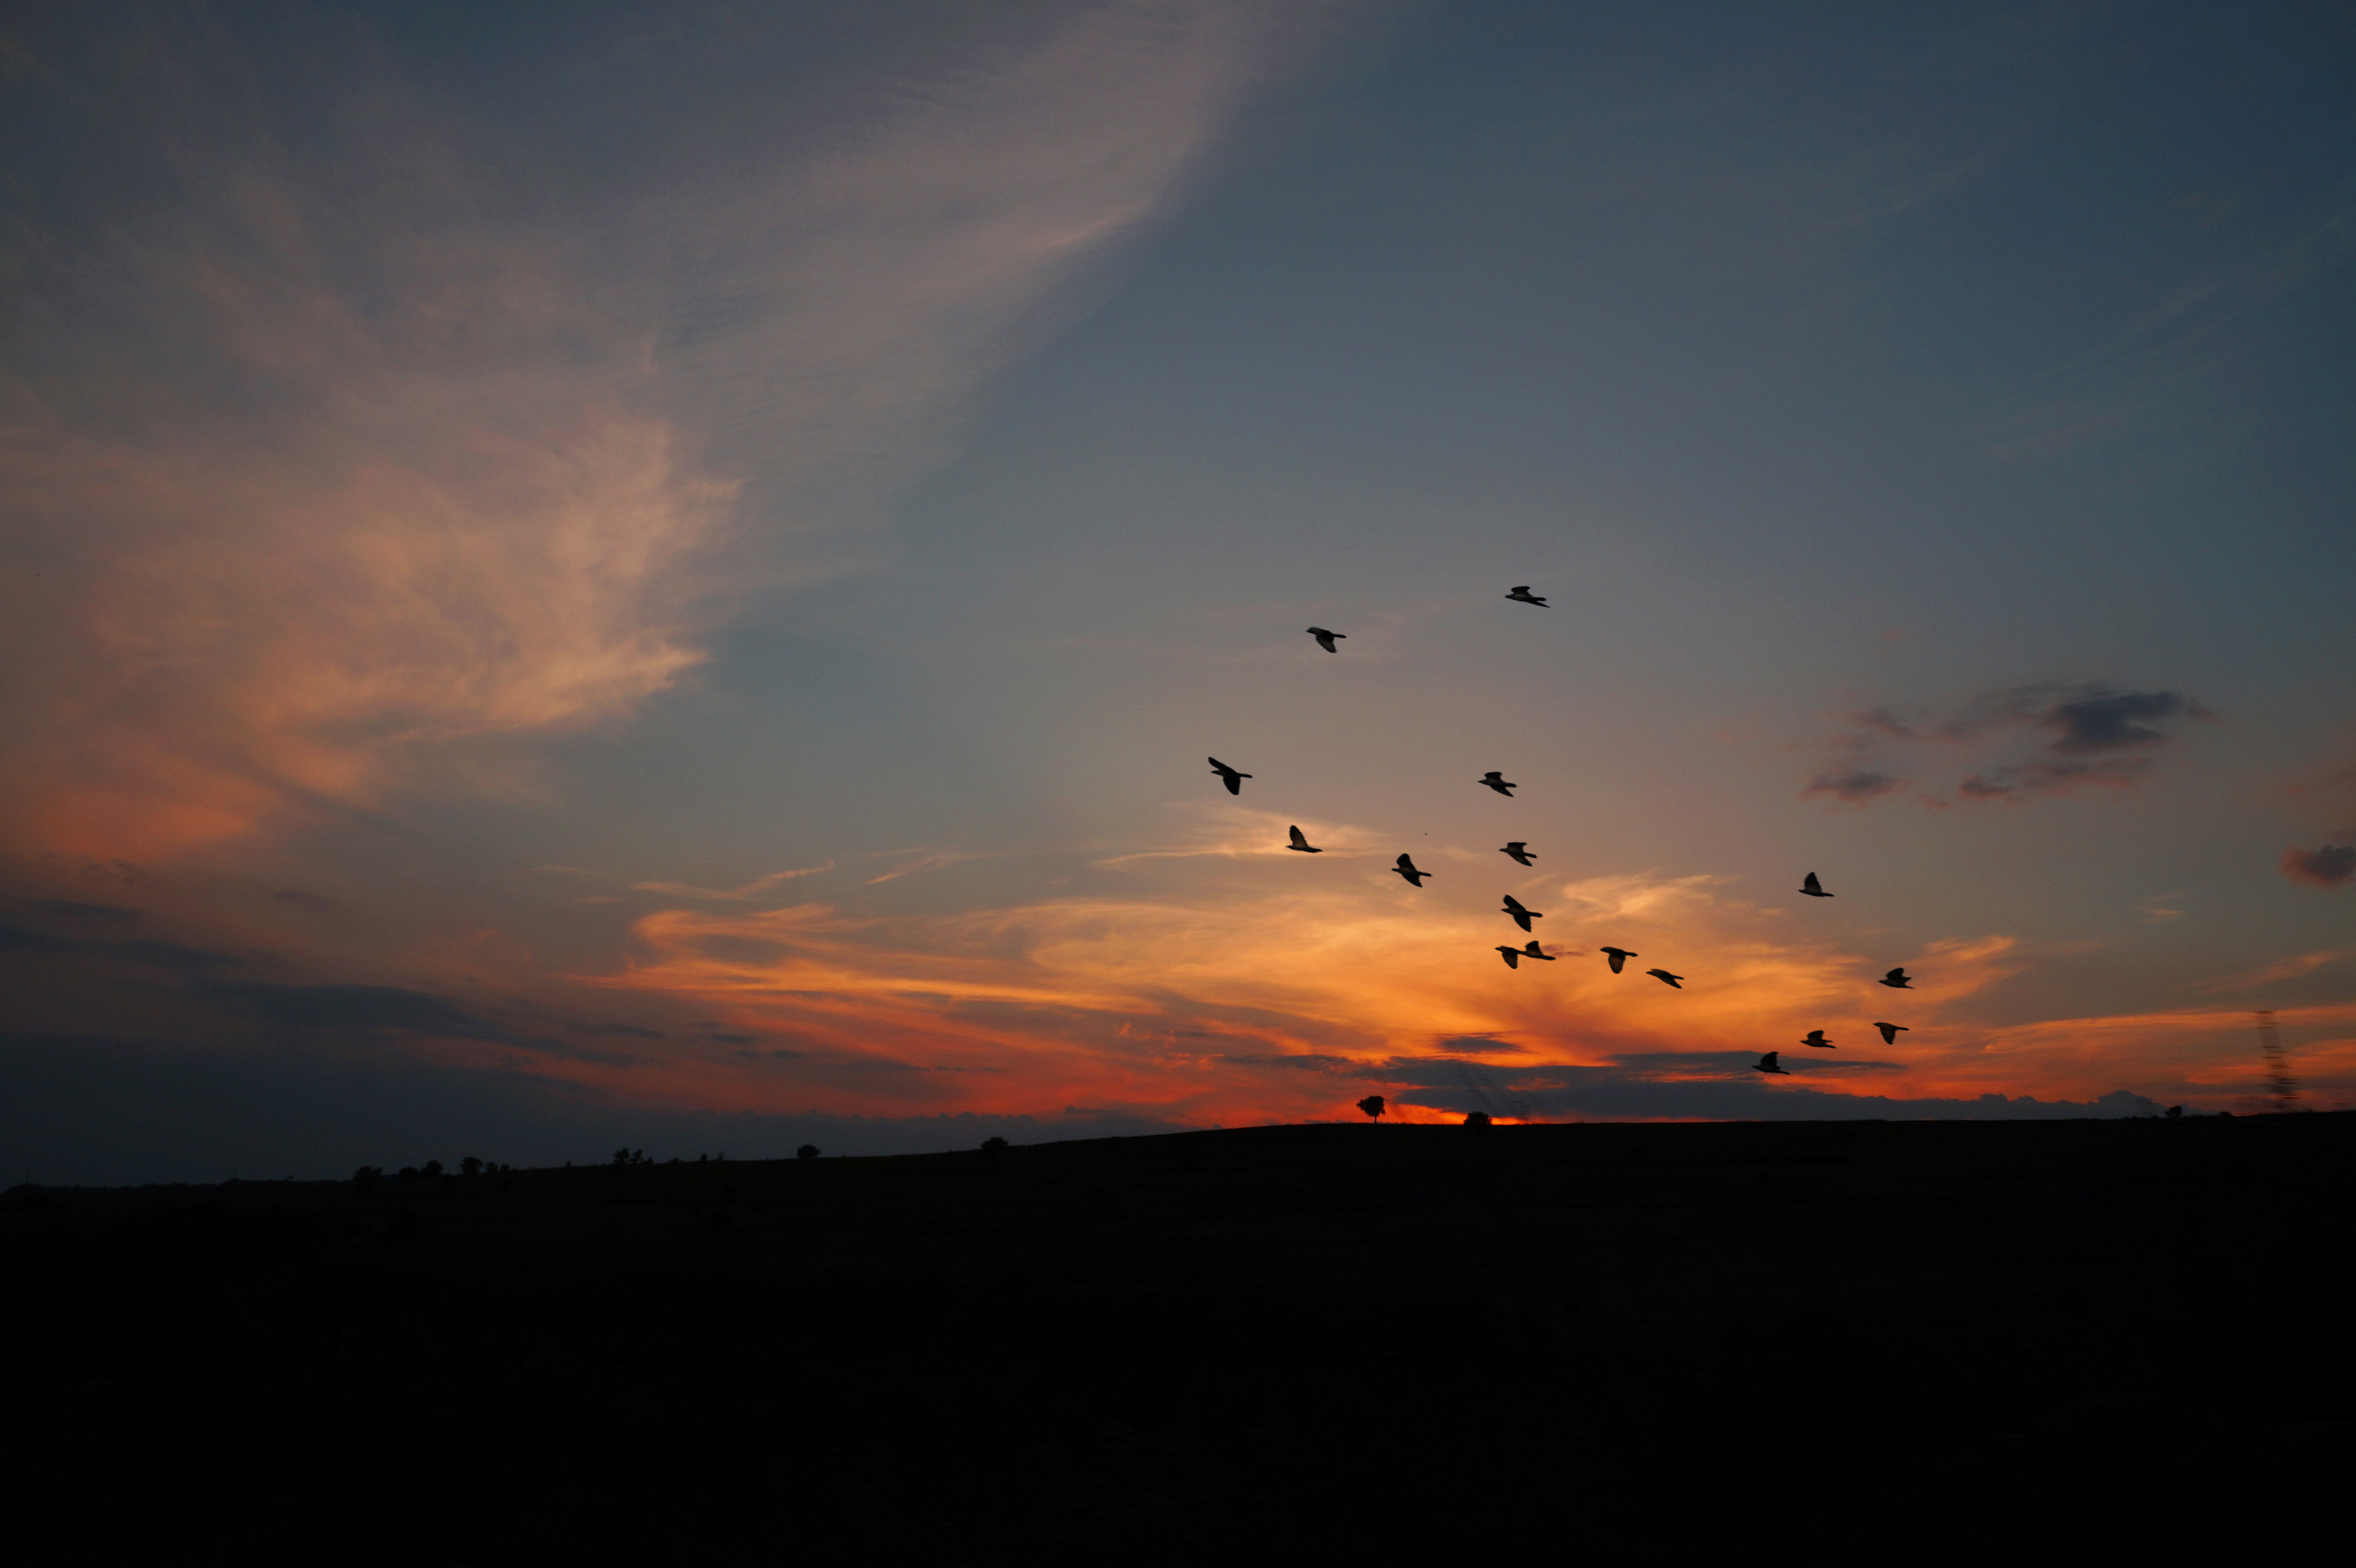 dusk, silhouettes, dark, birds, sunset, twilight phone background